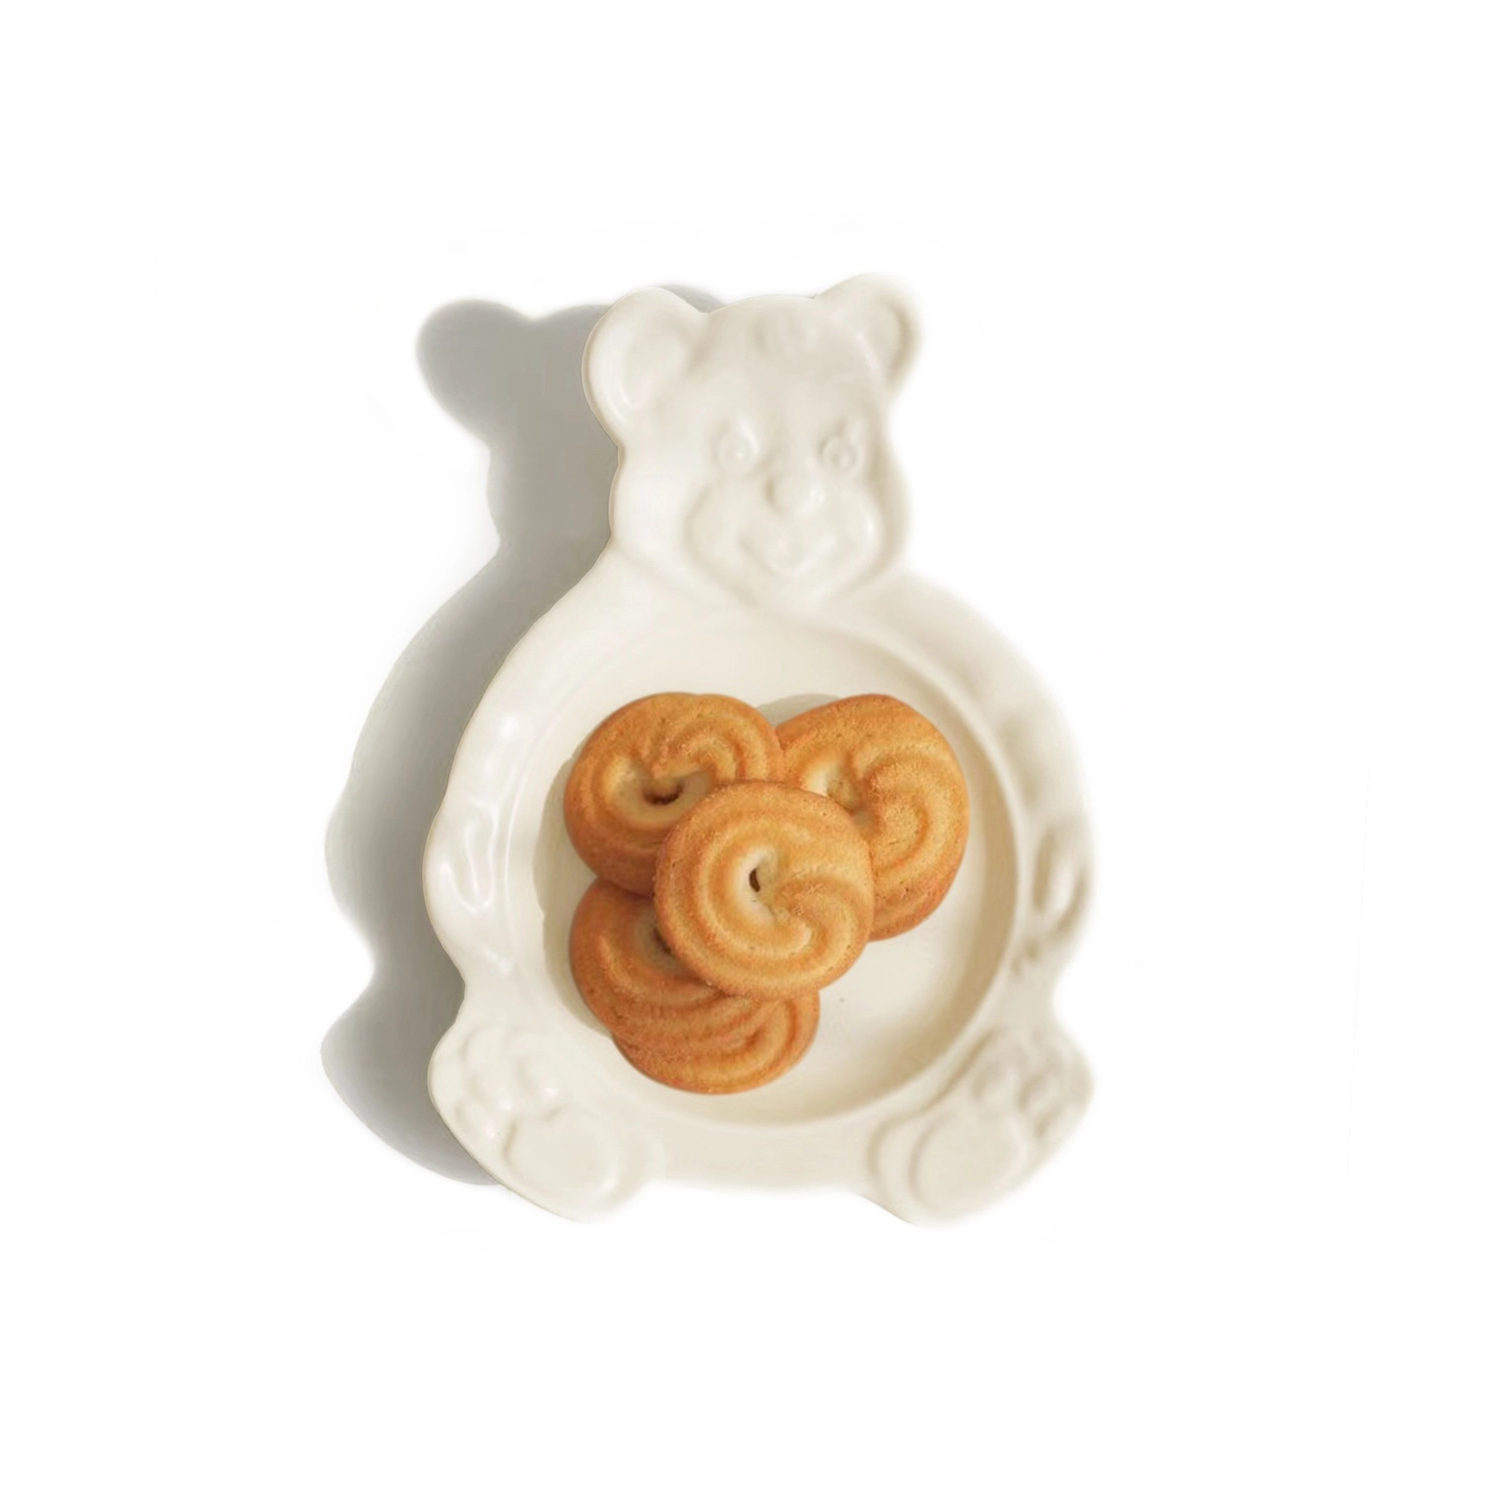 HORNACHOS 小熊碗 - 陶瓷 NT$ 180